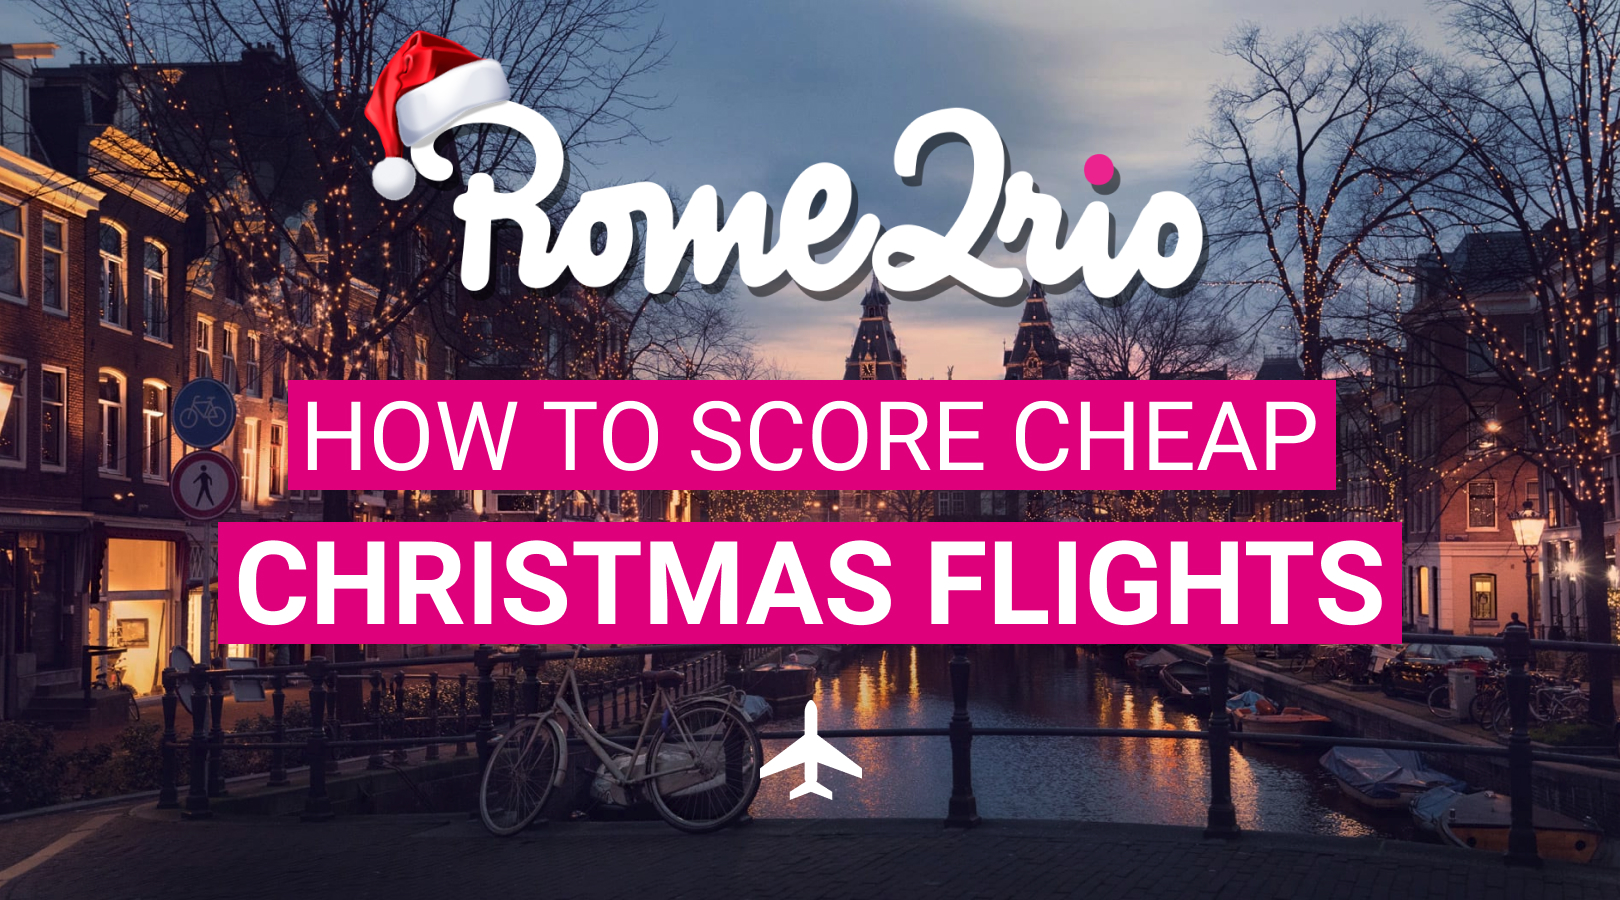 Cheap Christmas flights